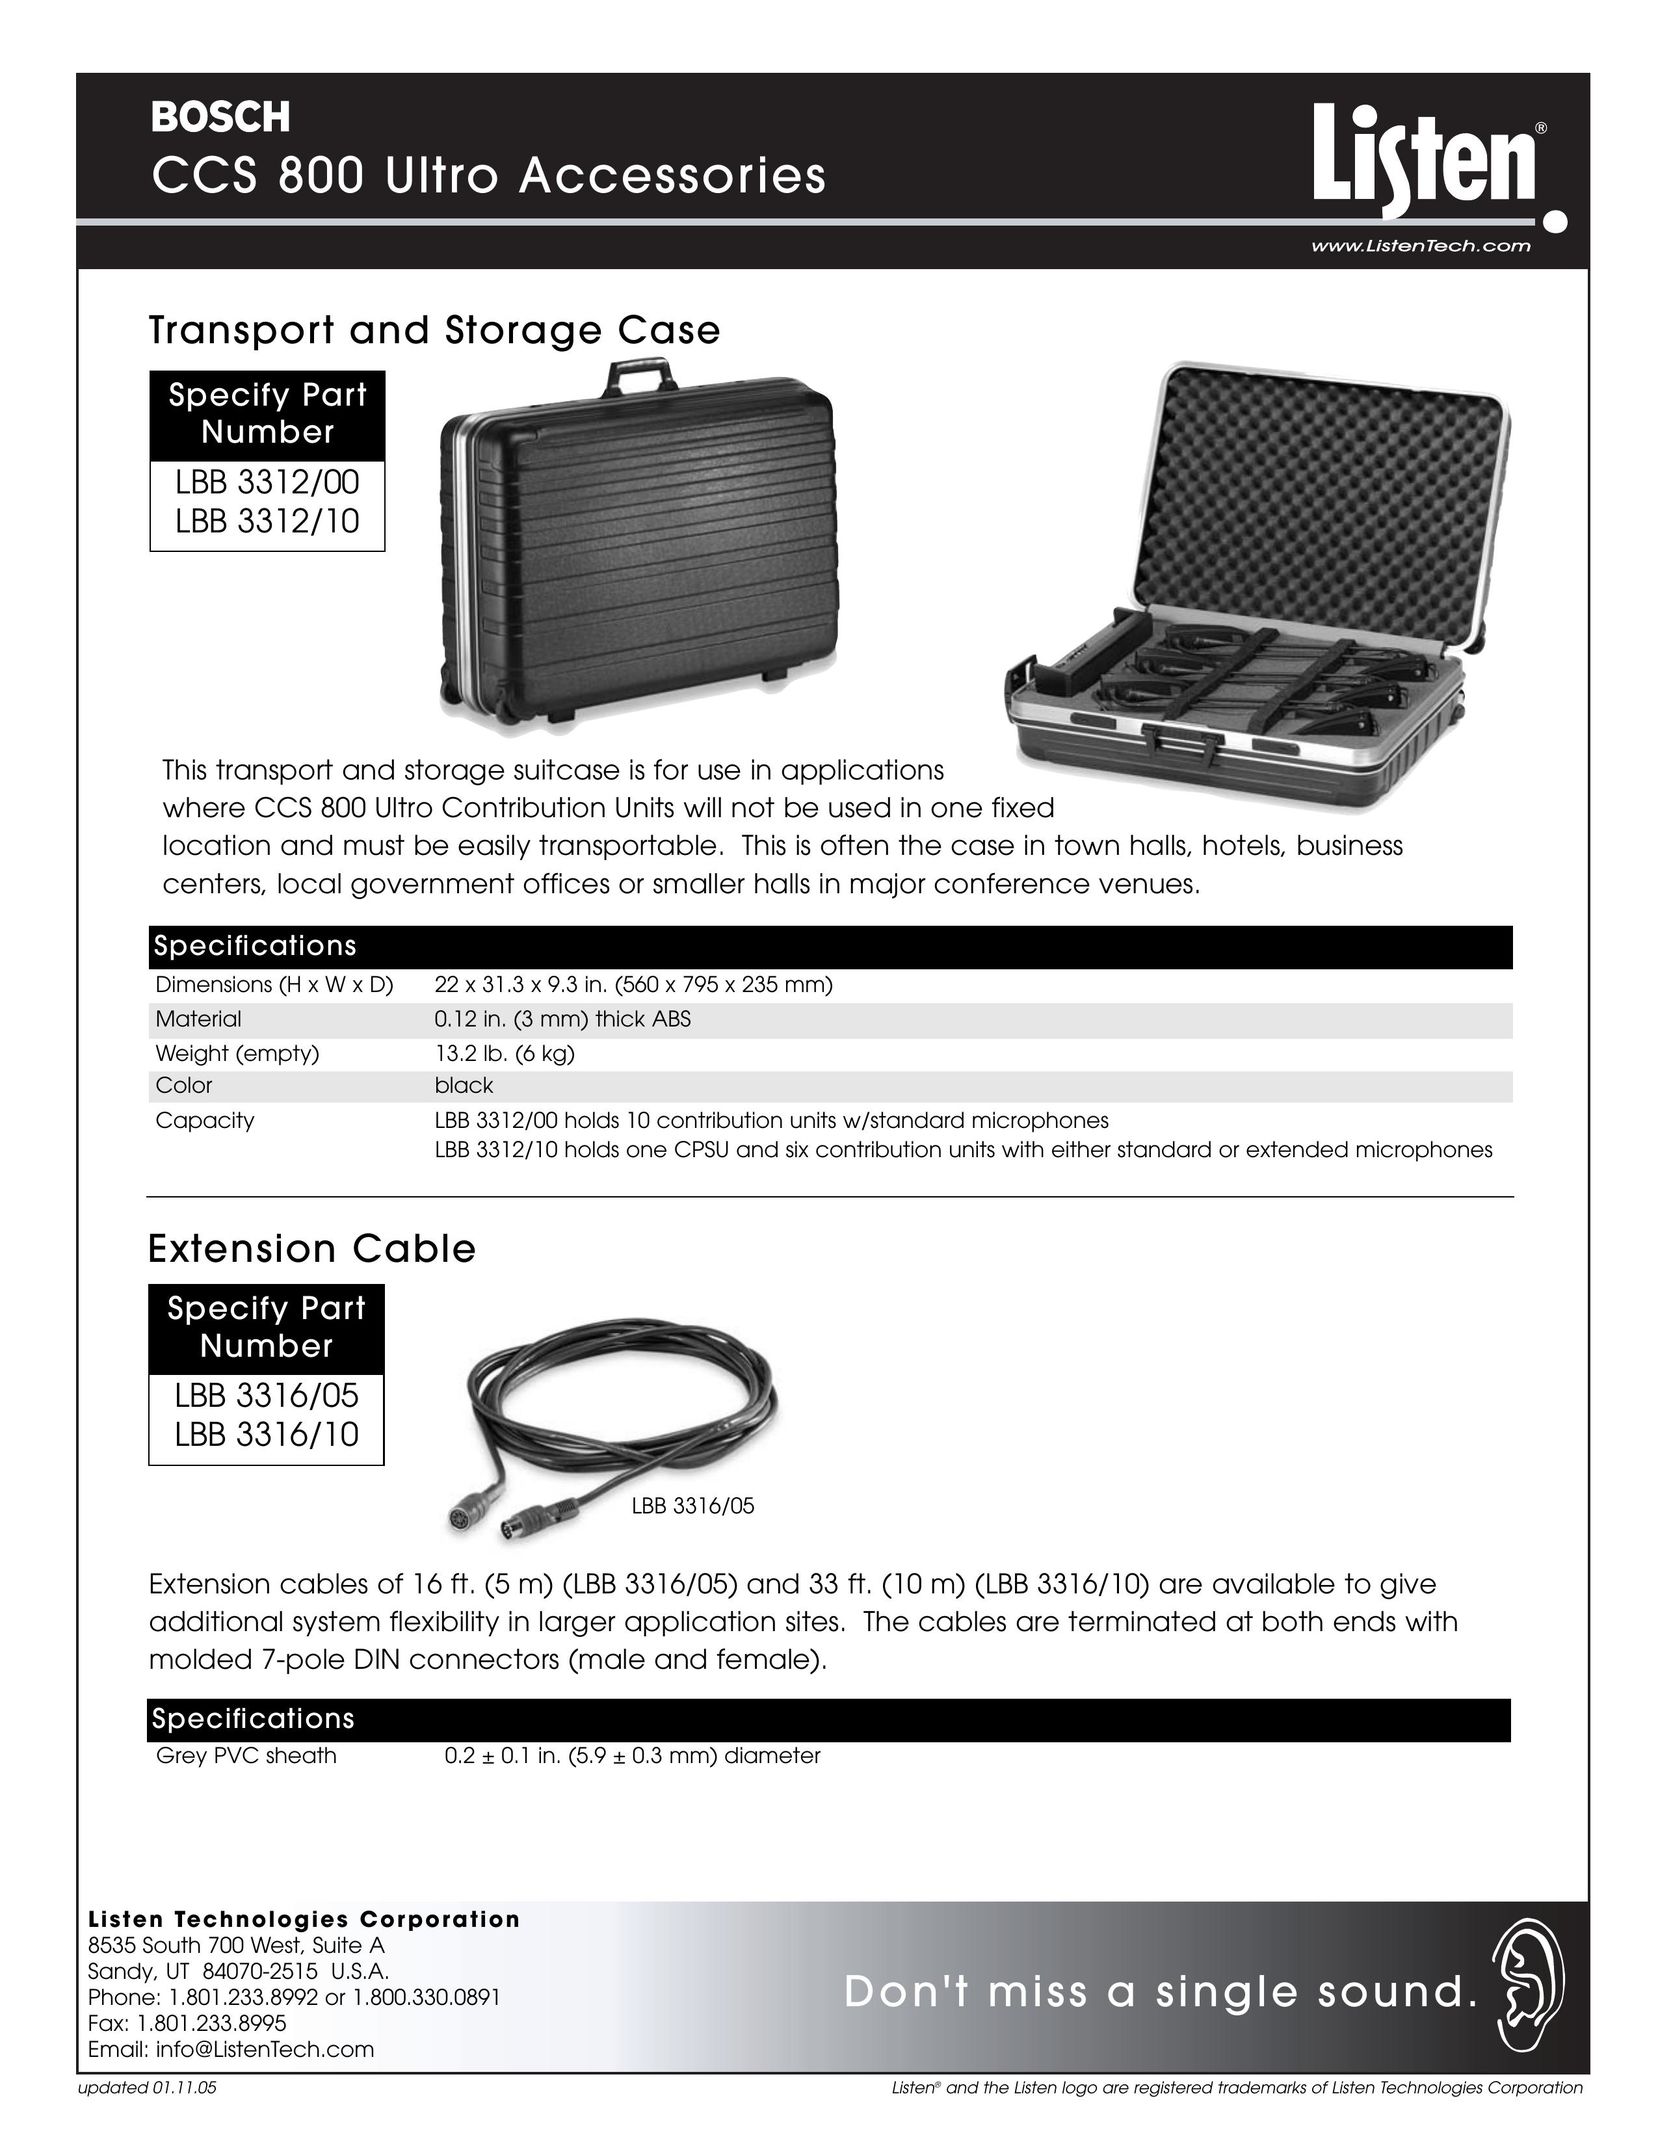 Listen Technologies LBB 3316/10 Carrying Case User Manual